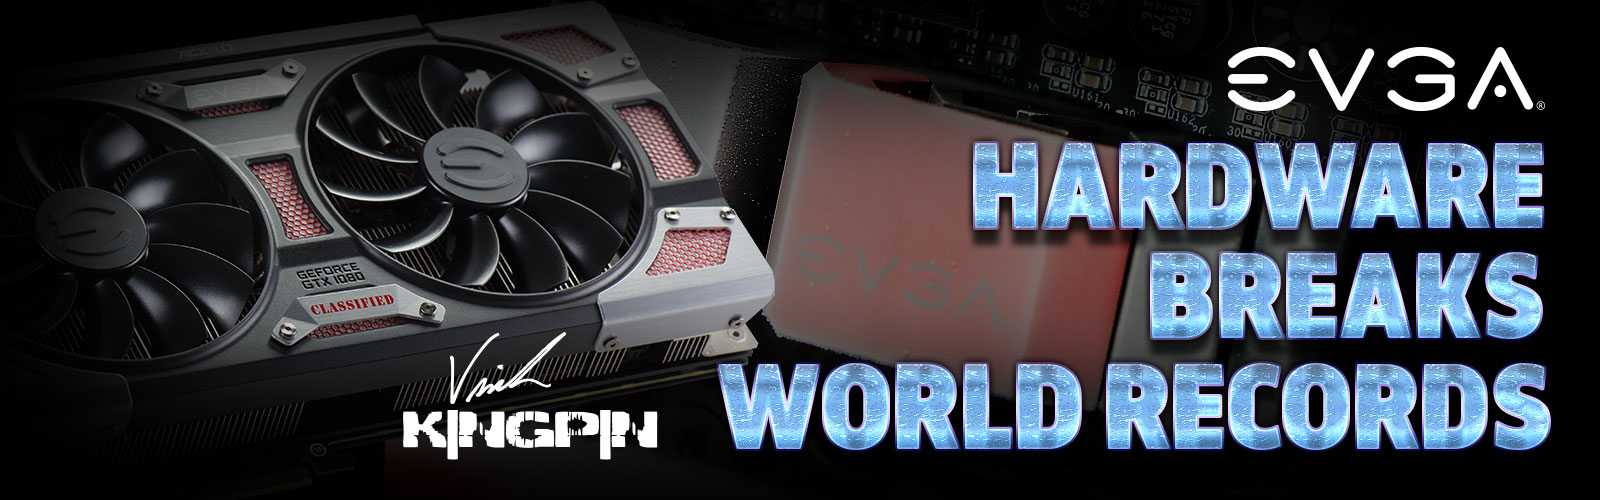 EVGA Hardware Breaks World Records